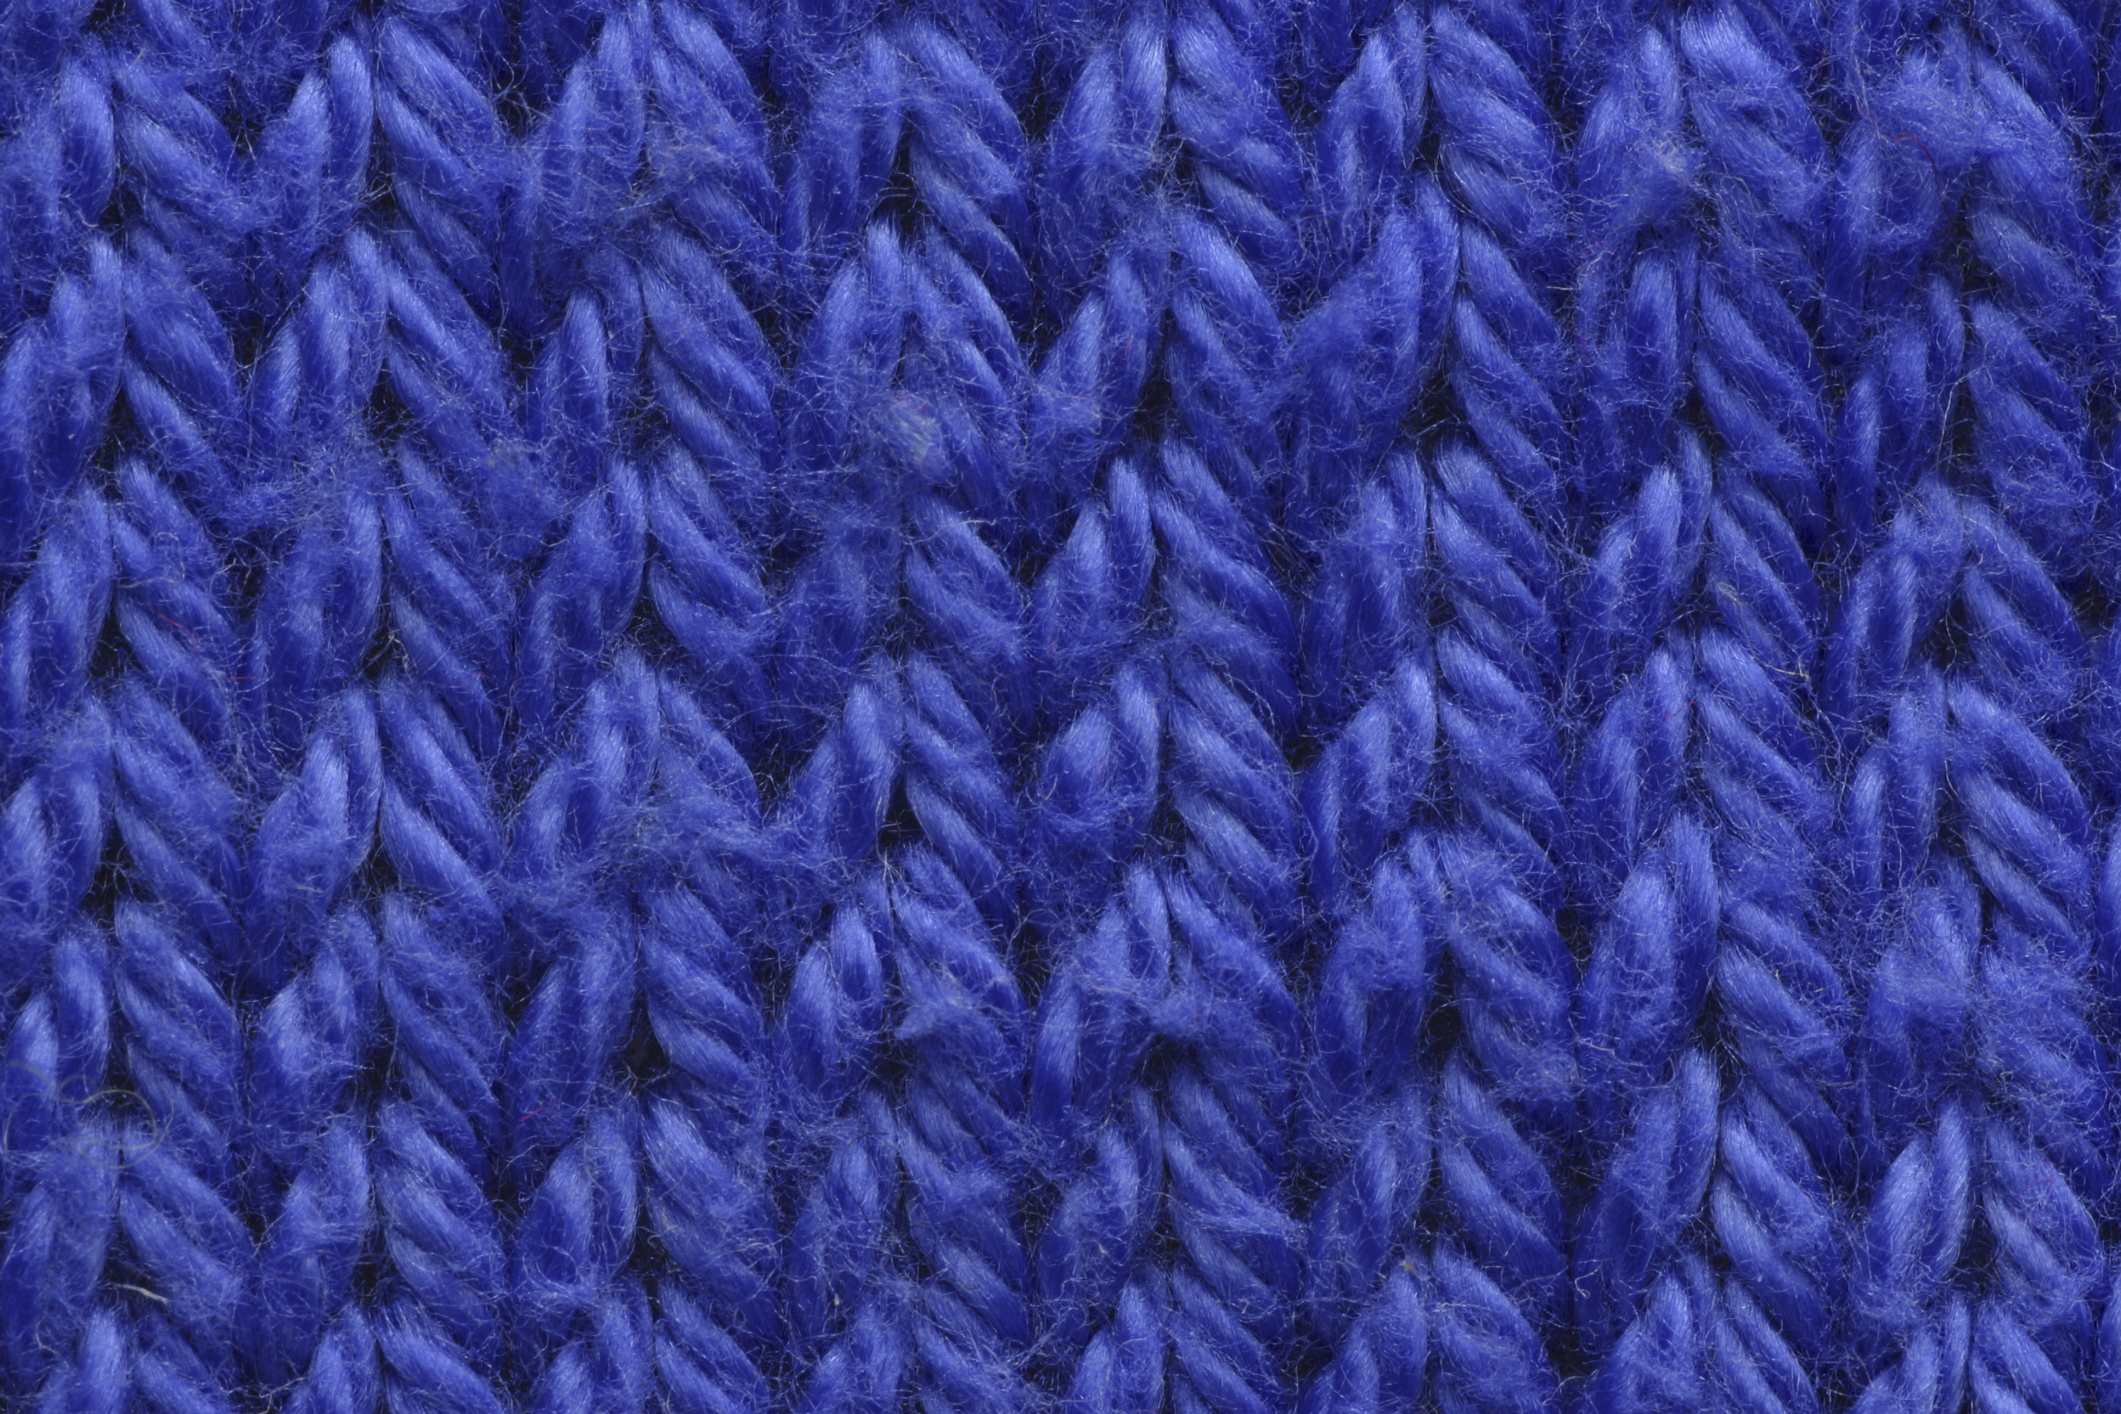 How to Dye Knit Fabrics